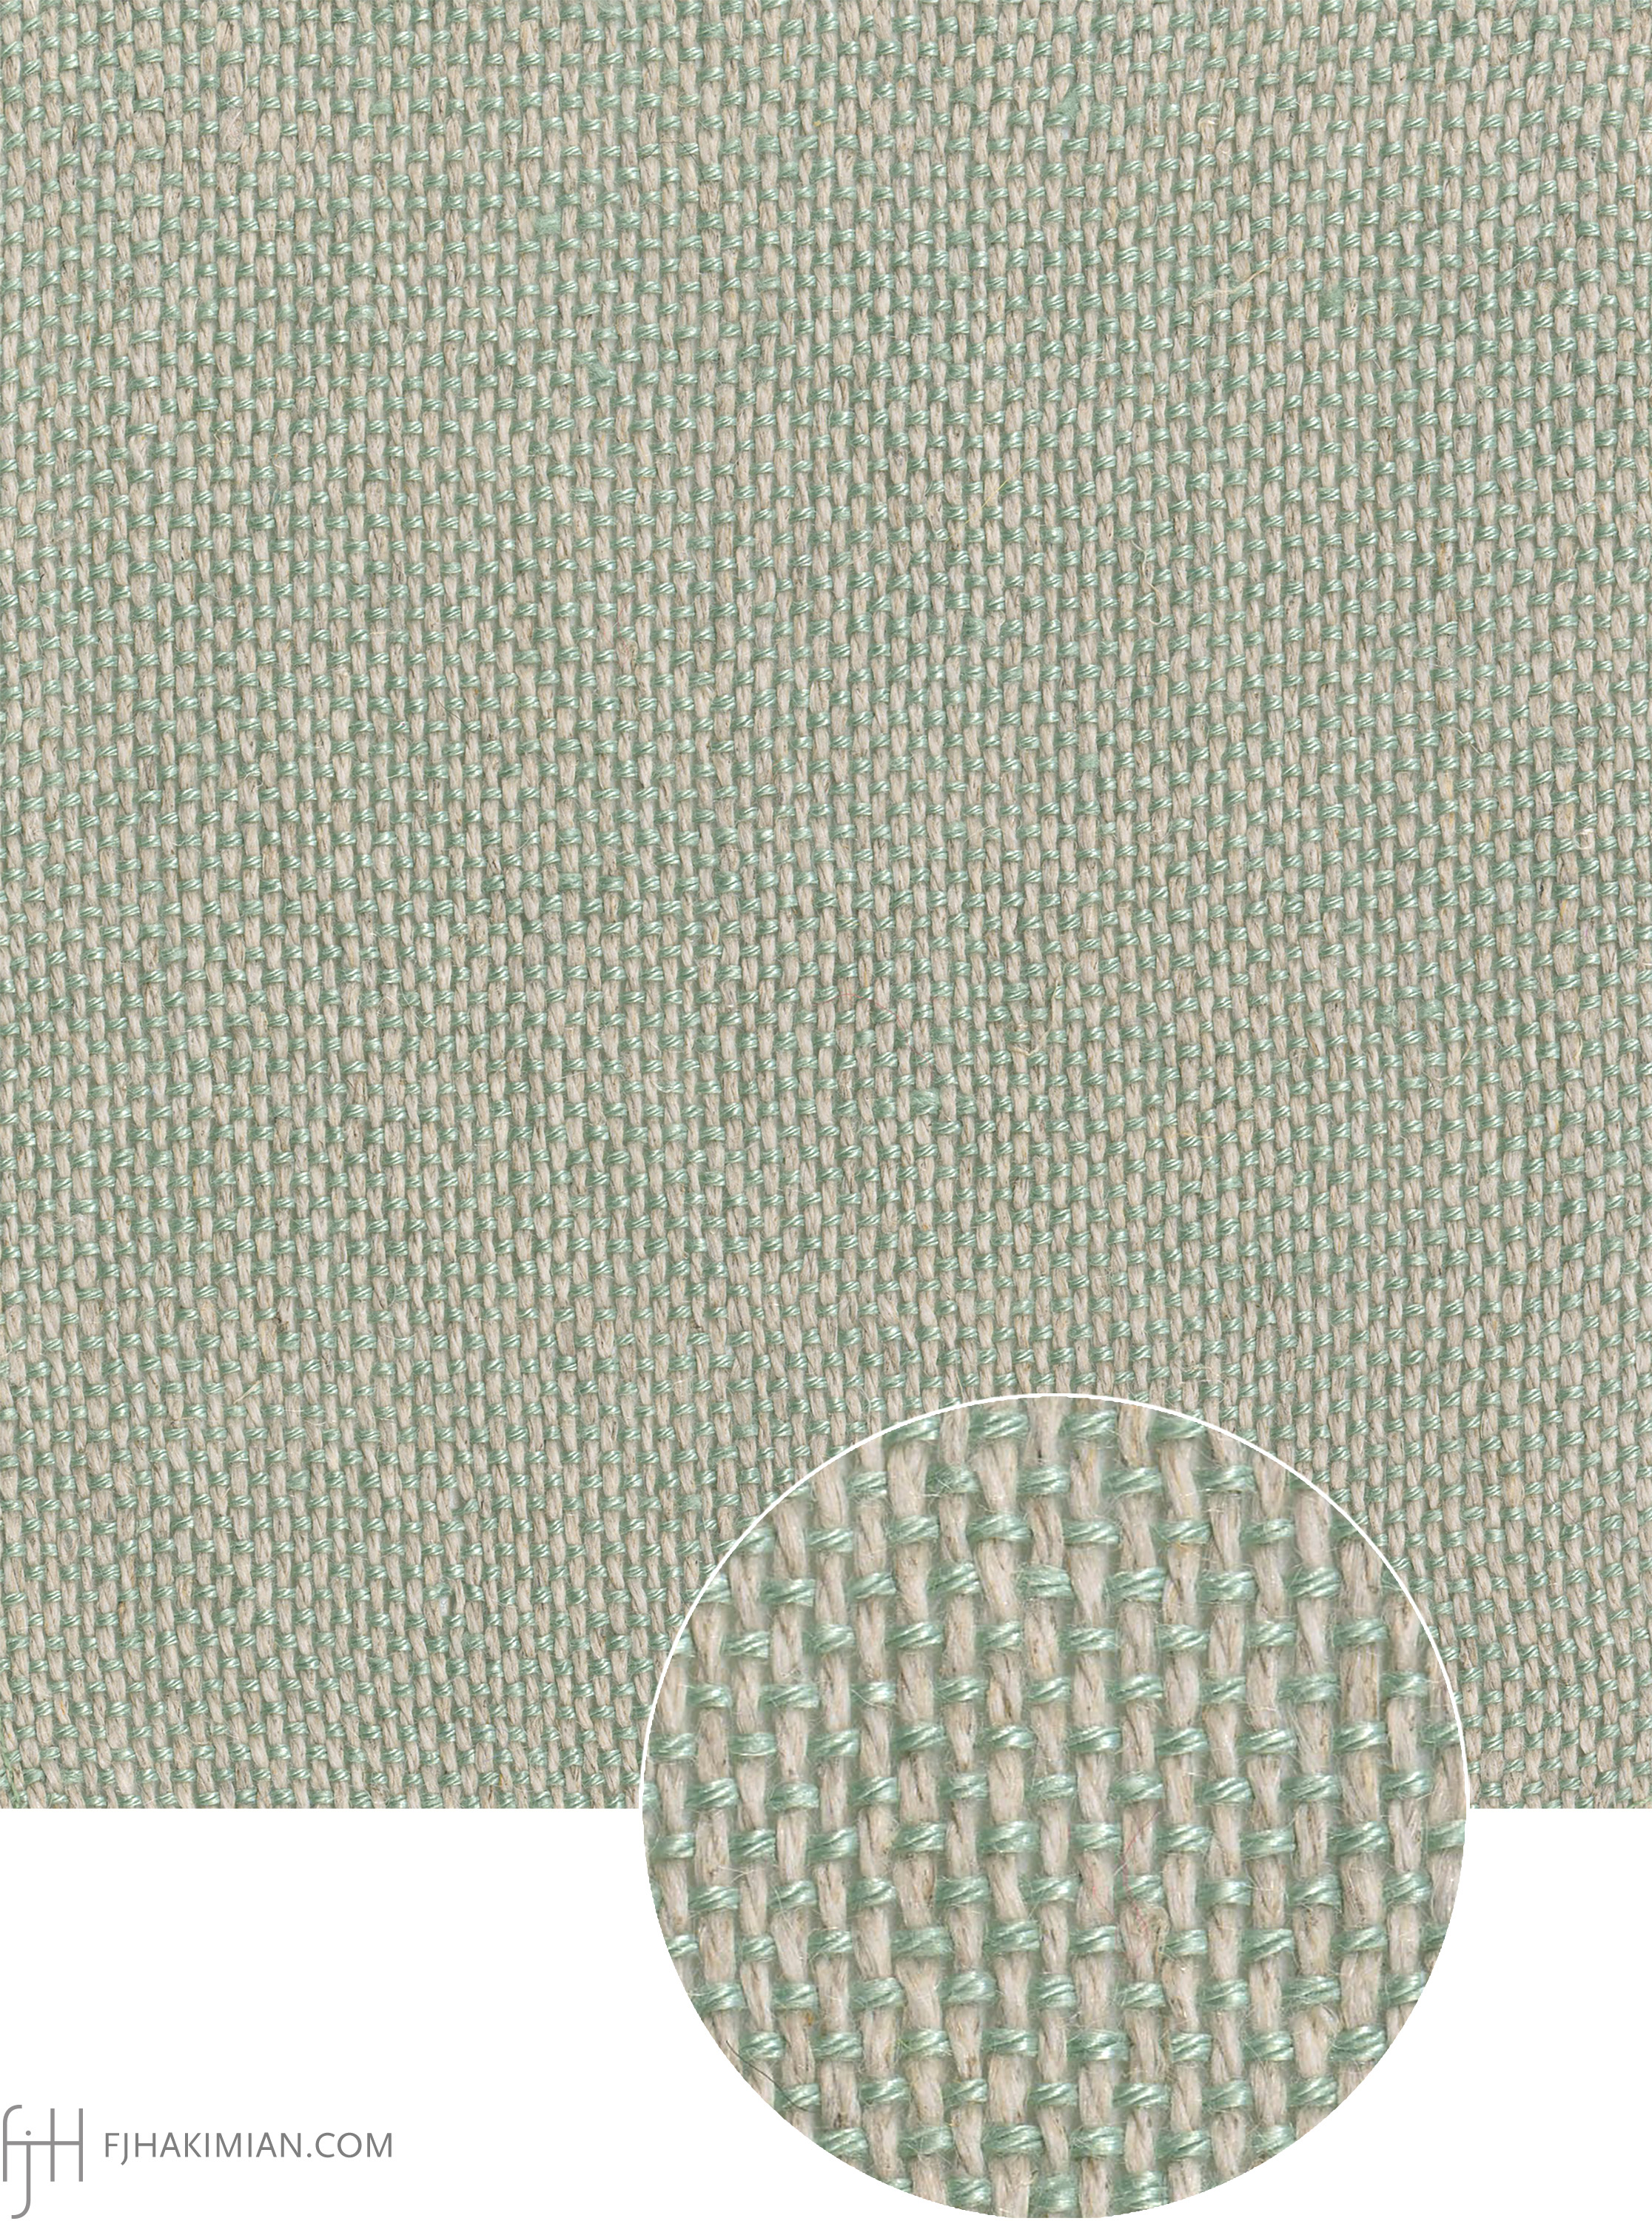 AB-LI-13 Upholstery Fabric | FJ Hakimian Carpet Gallery, New York 